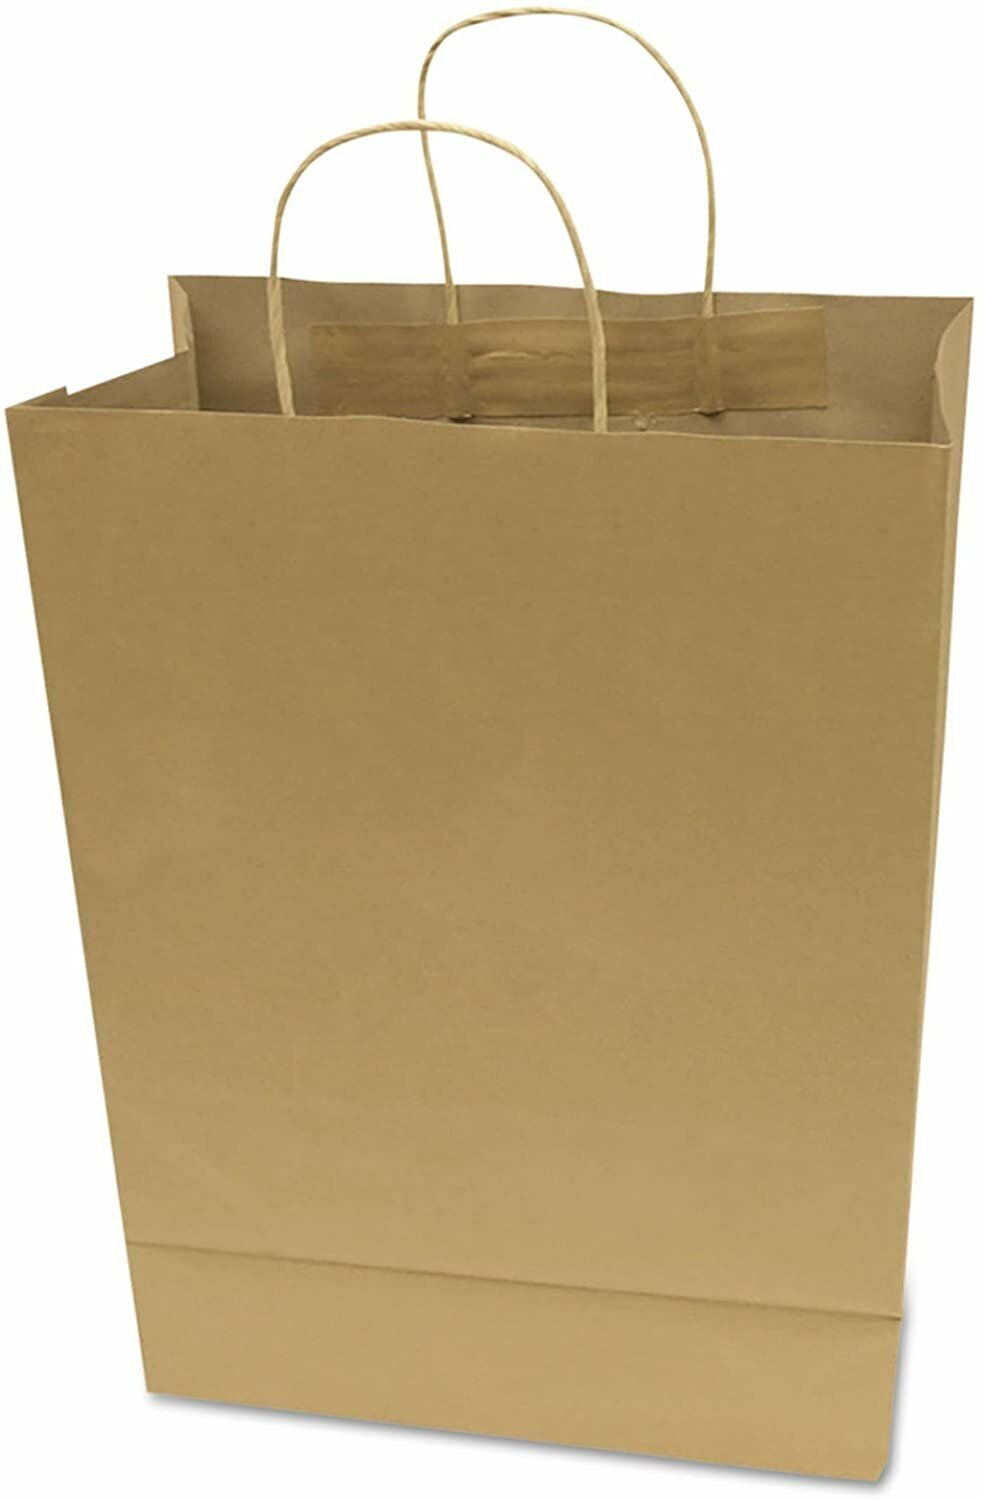 Cosco 091565 Premium Small Brown Paper Shopping Bag, 10-Inch W x 13-Inch H,...